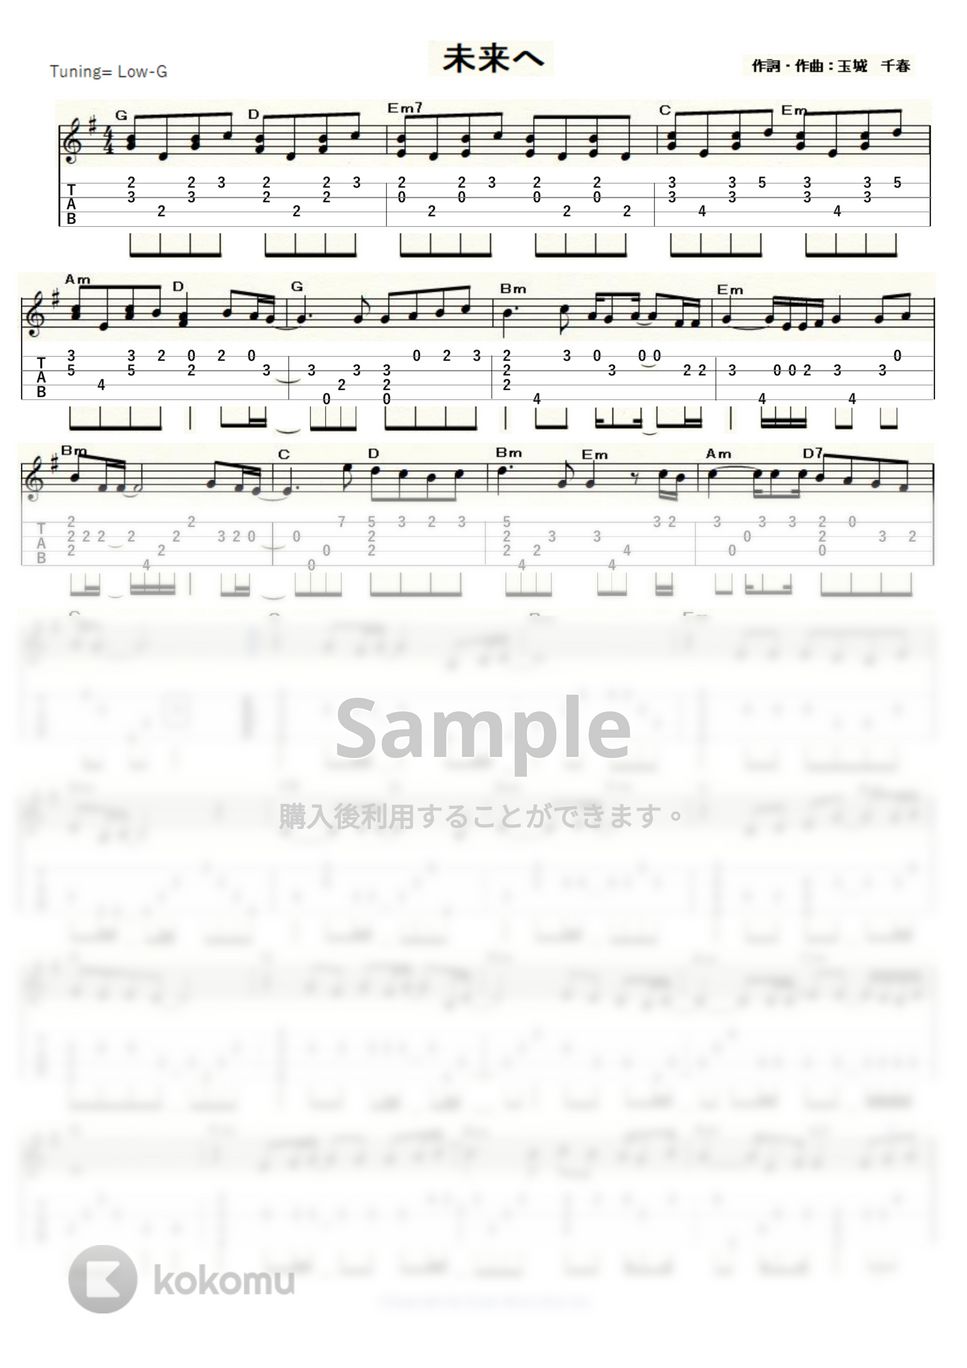 Kiroro - 未来へ (ｳｸﾚﾚｿﾛ / Low-G / 中級) by ukulelepapa